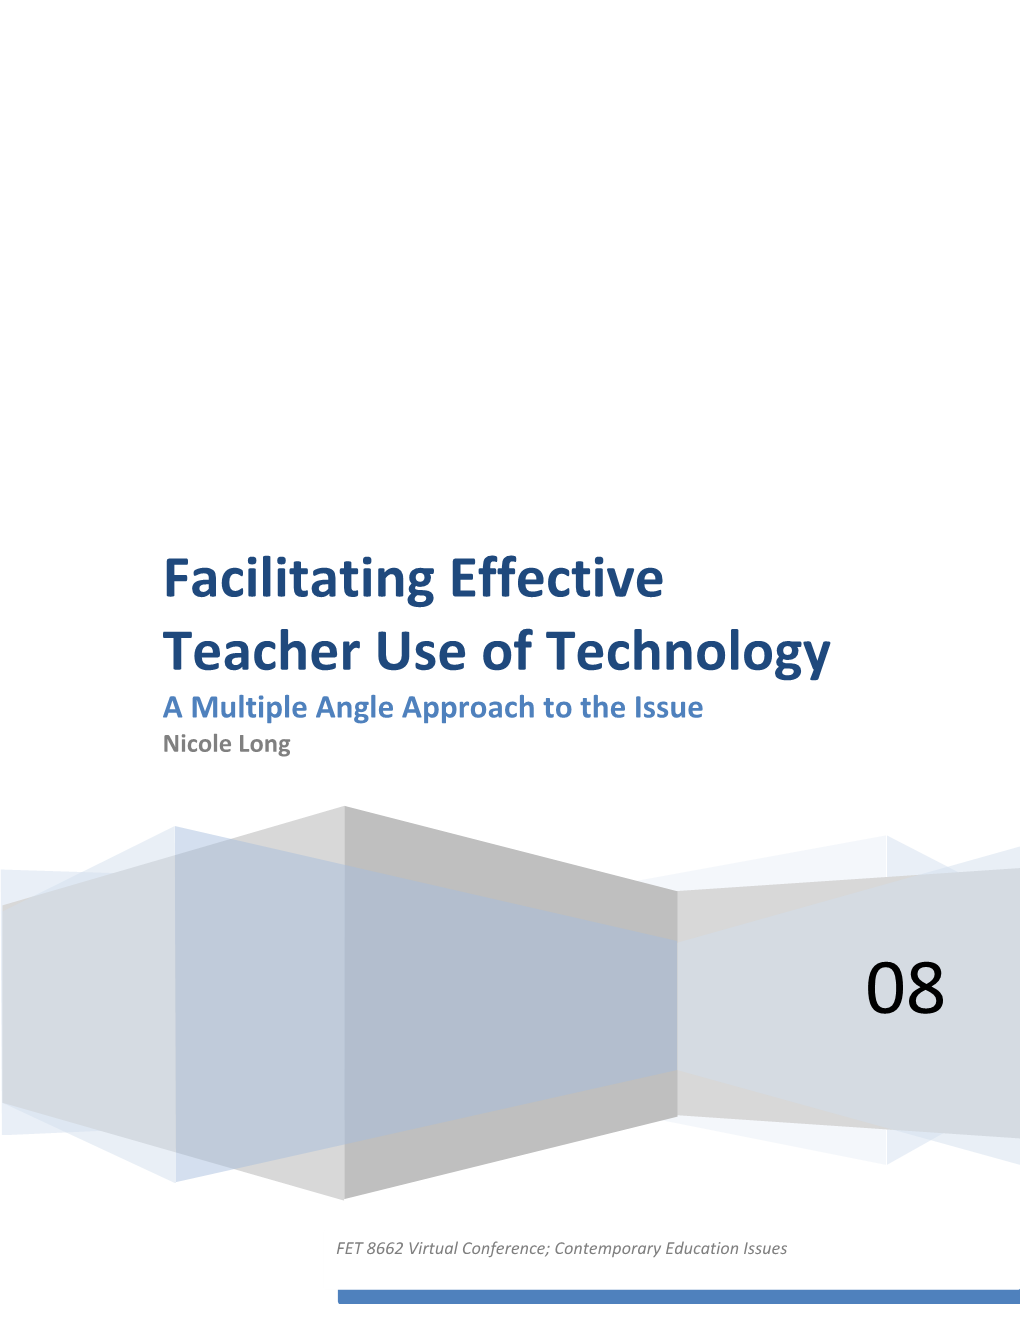 Facilitating Effective Teacher Use of Technology